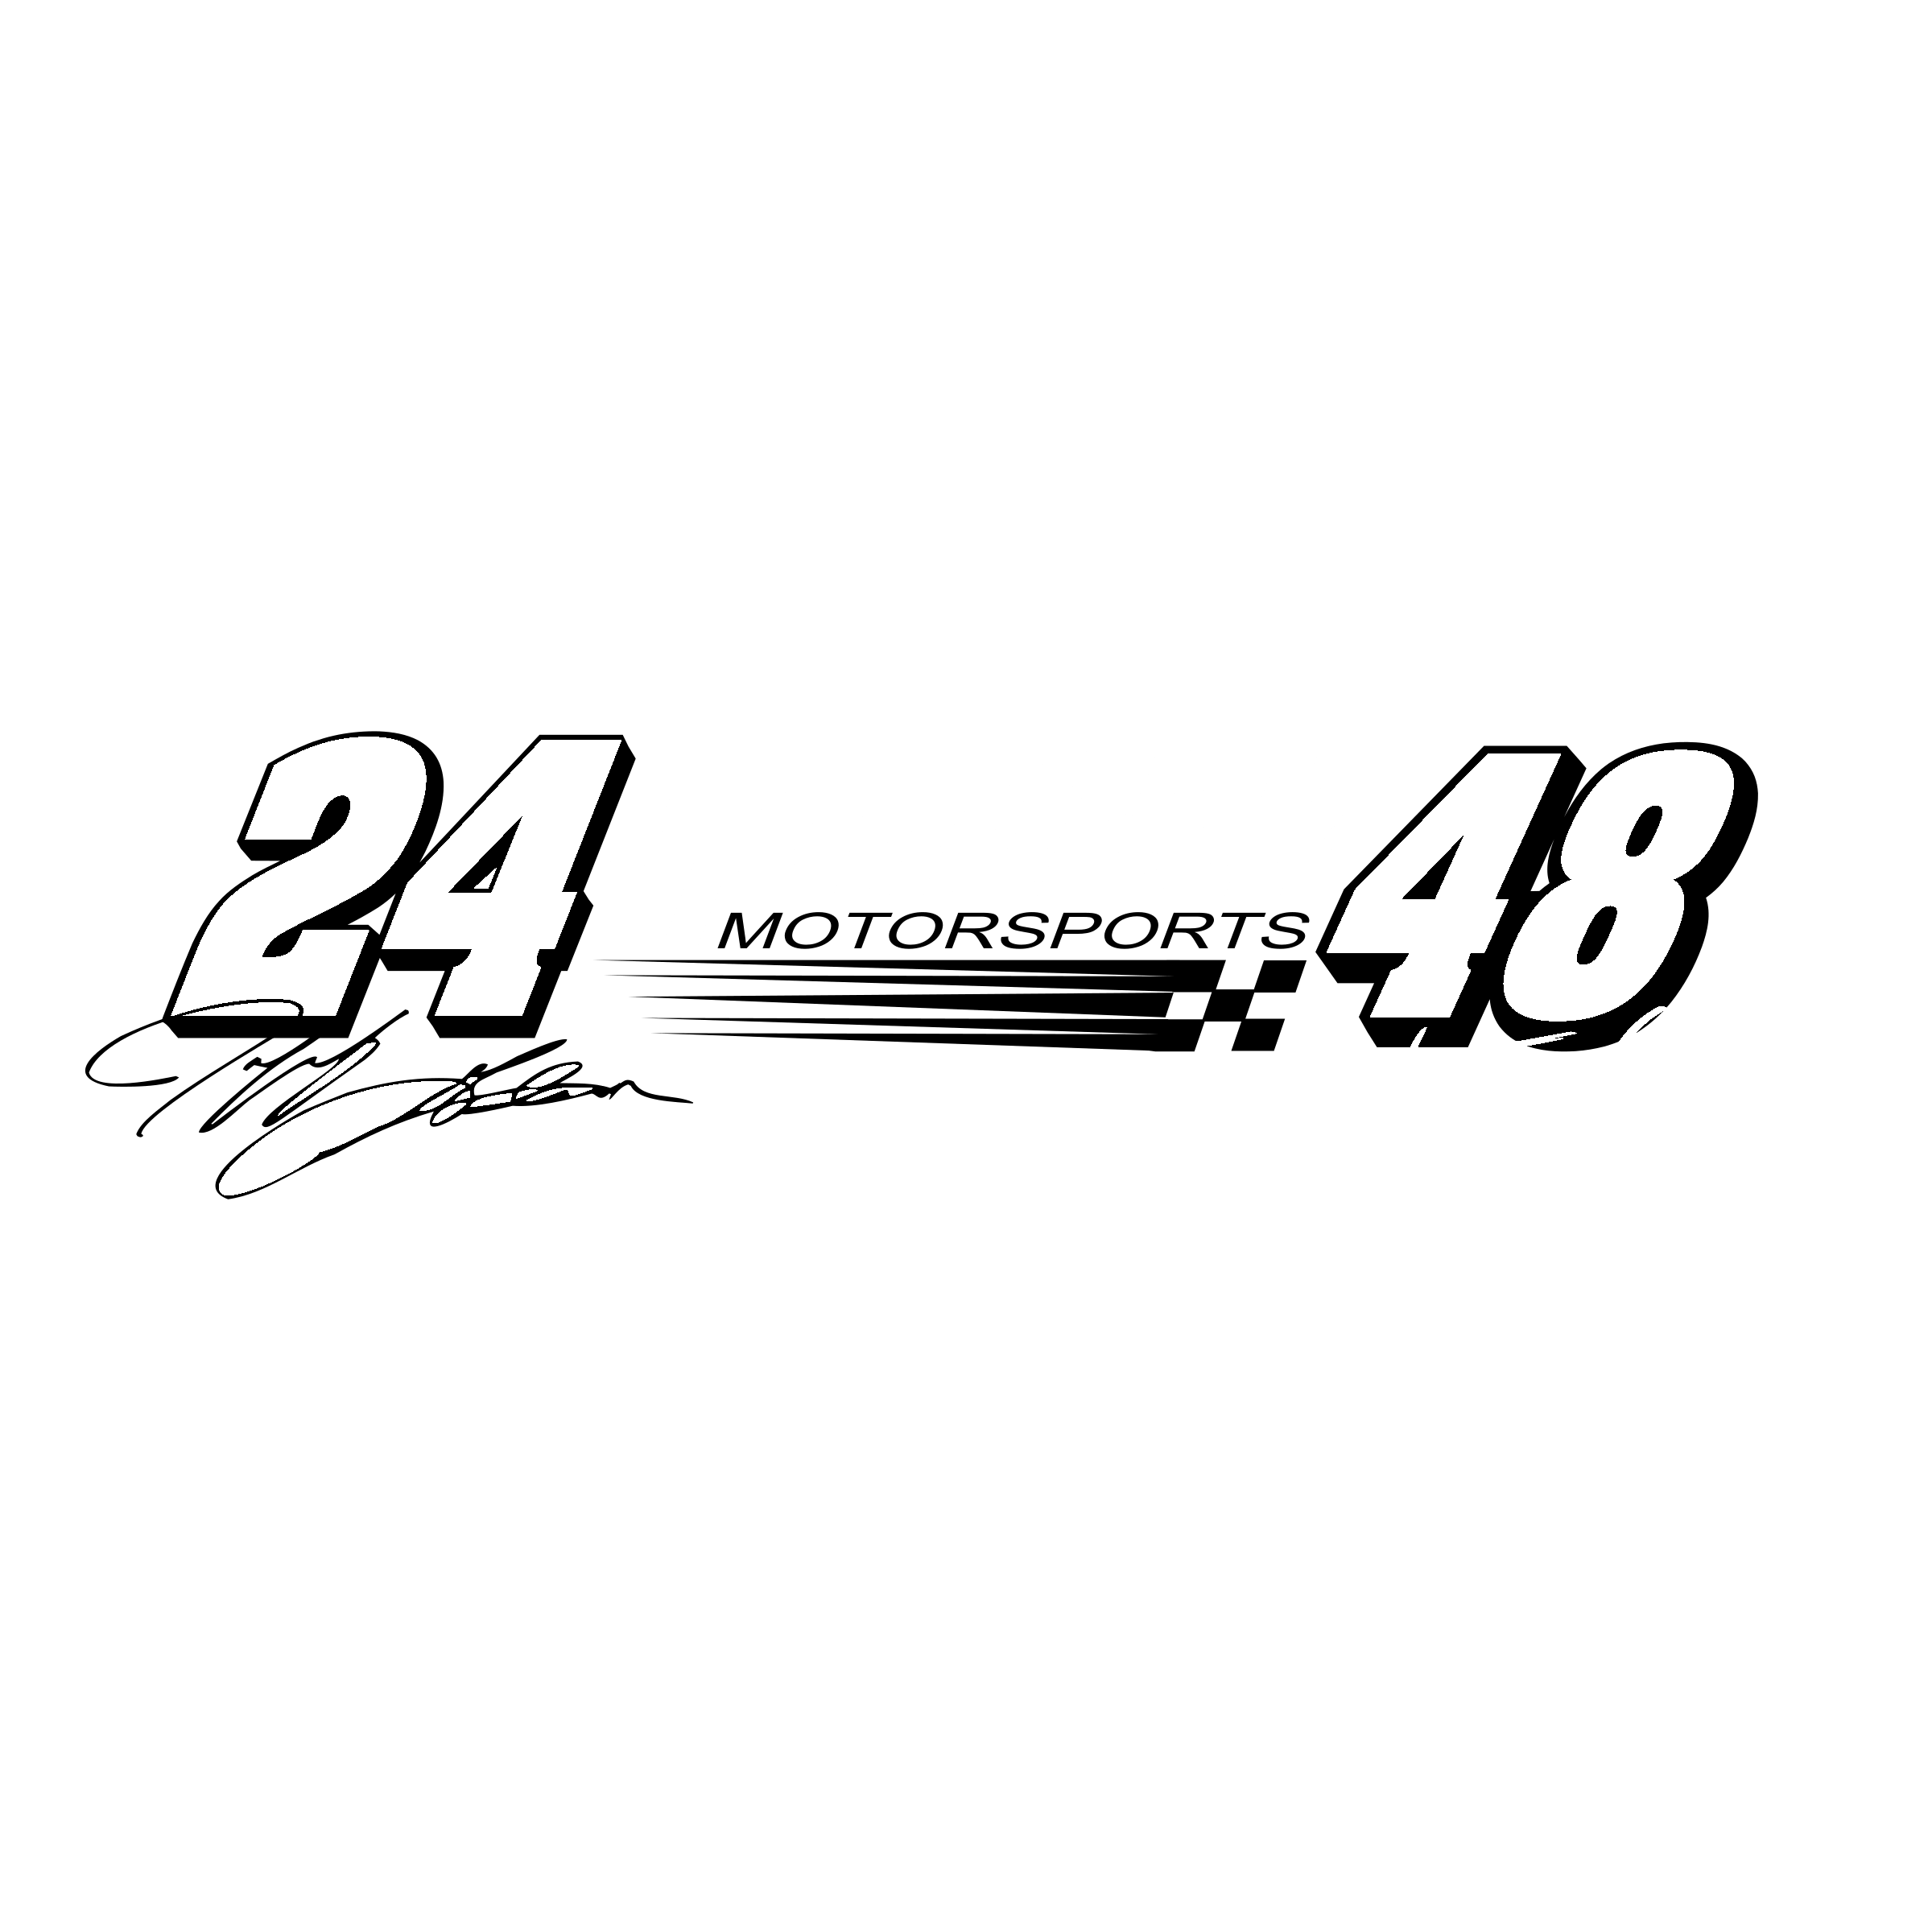 Hendrick Motorsports Logo - Hendrick Motorsports Logo PNG Transparent & SVG Vector